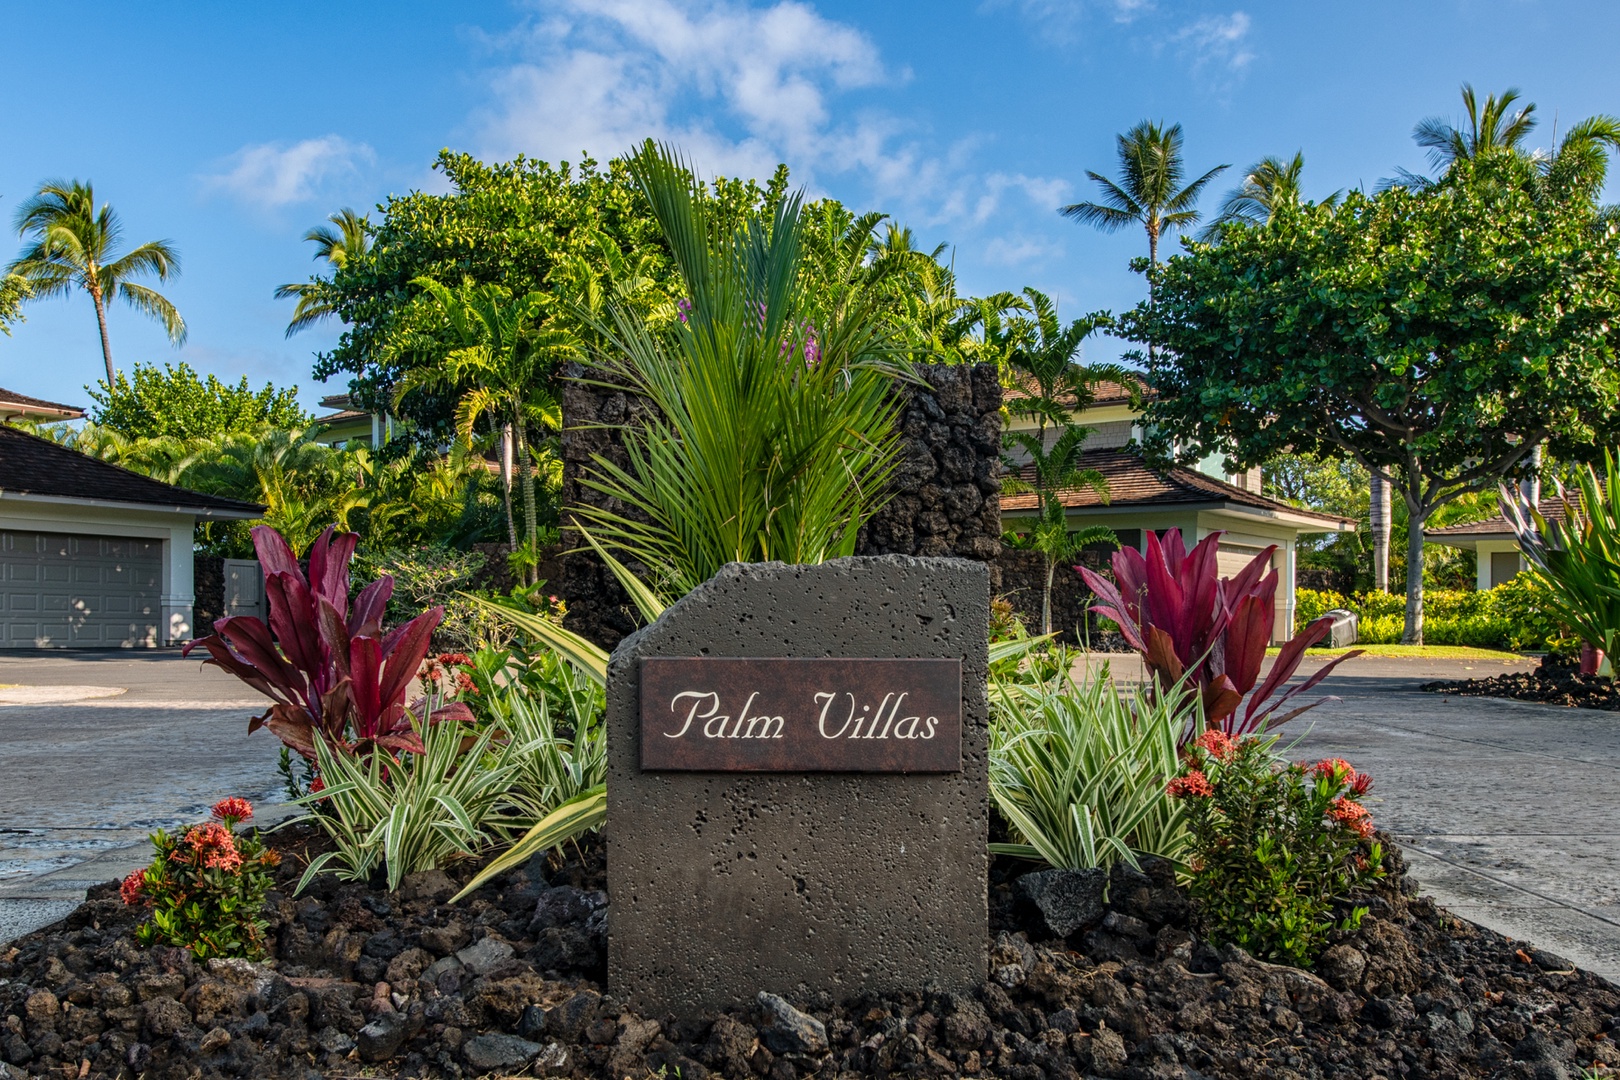 Kailua Kona Vacation Rentals, 3BD Palm Villa (130B) at Four Seasons Resort at Hualalai - Highly sought after Palm Villas, prime location and exquisite views.